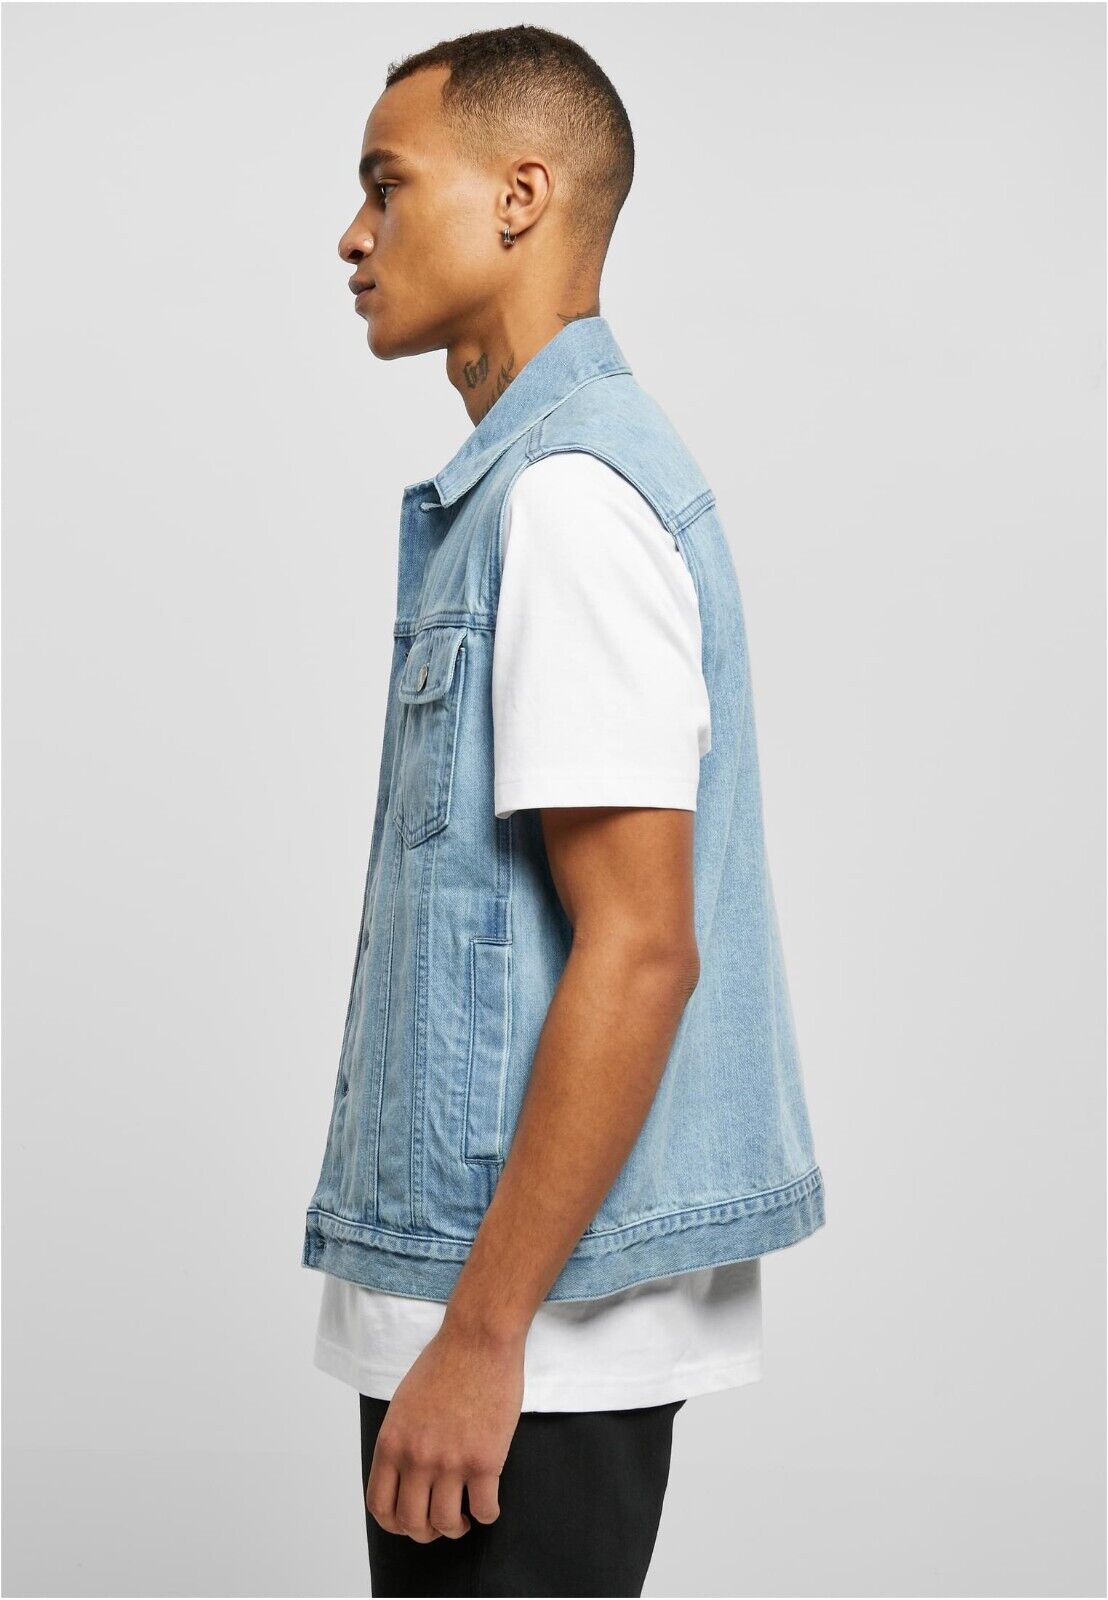 Urban Classics Vest Jacket Men\'s Jeans Denim Vest Size 3XL | eBay